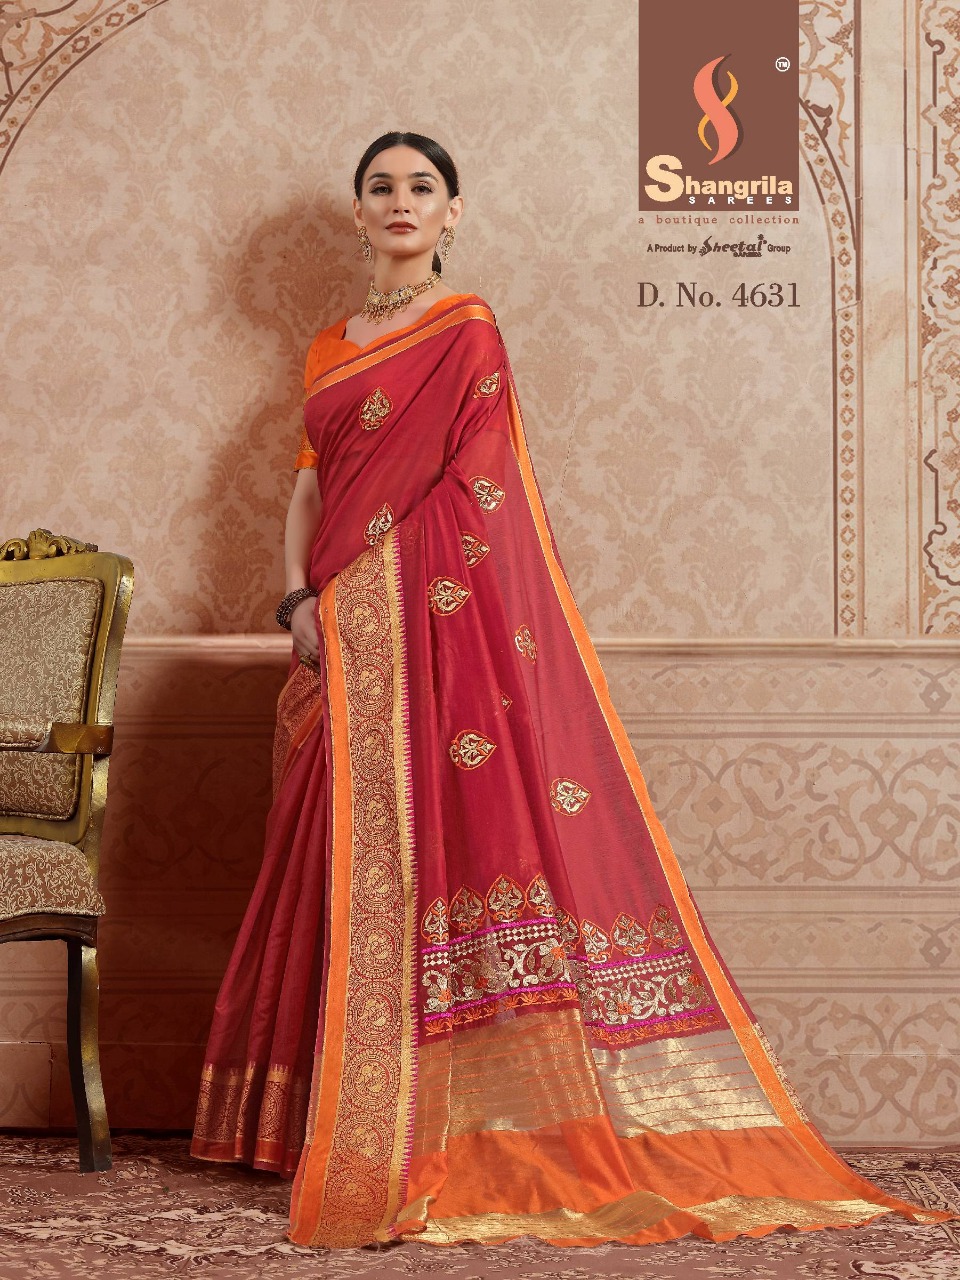 shangrila namrata cotton colorful fancy collection of sarees